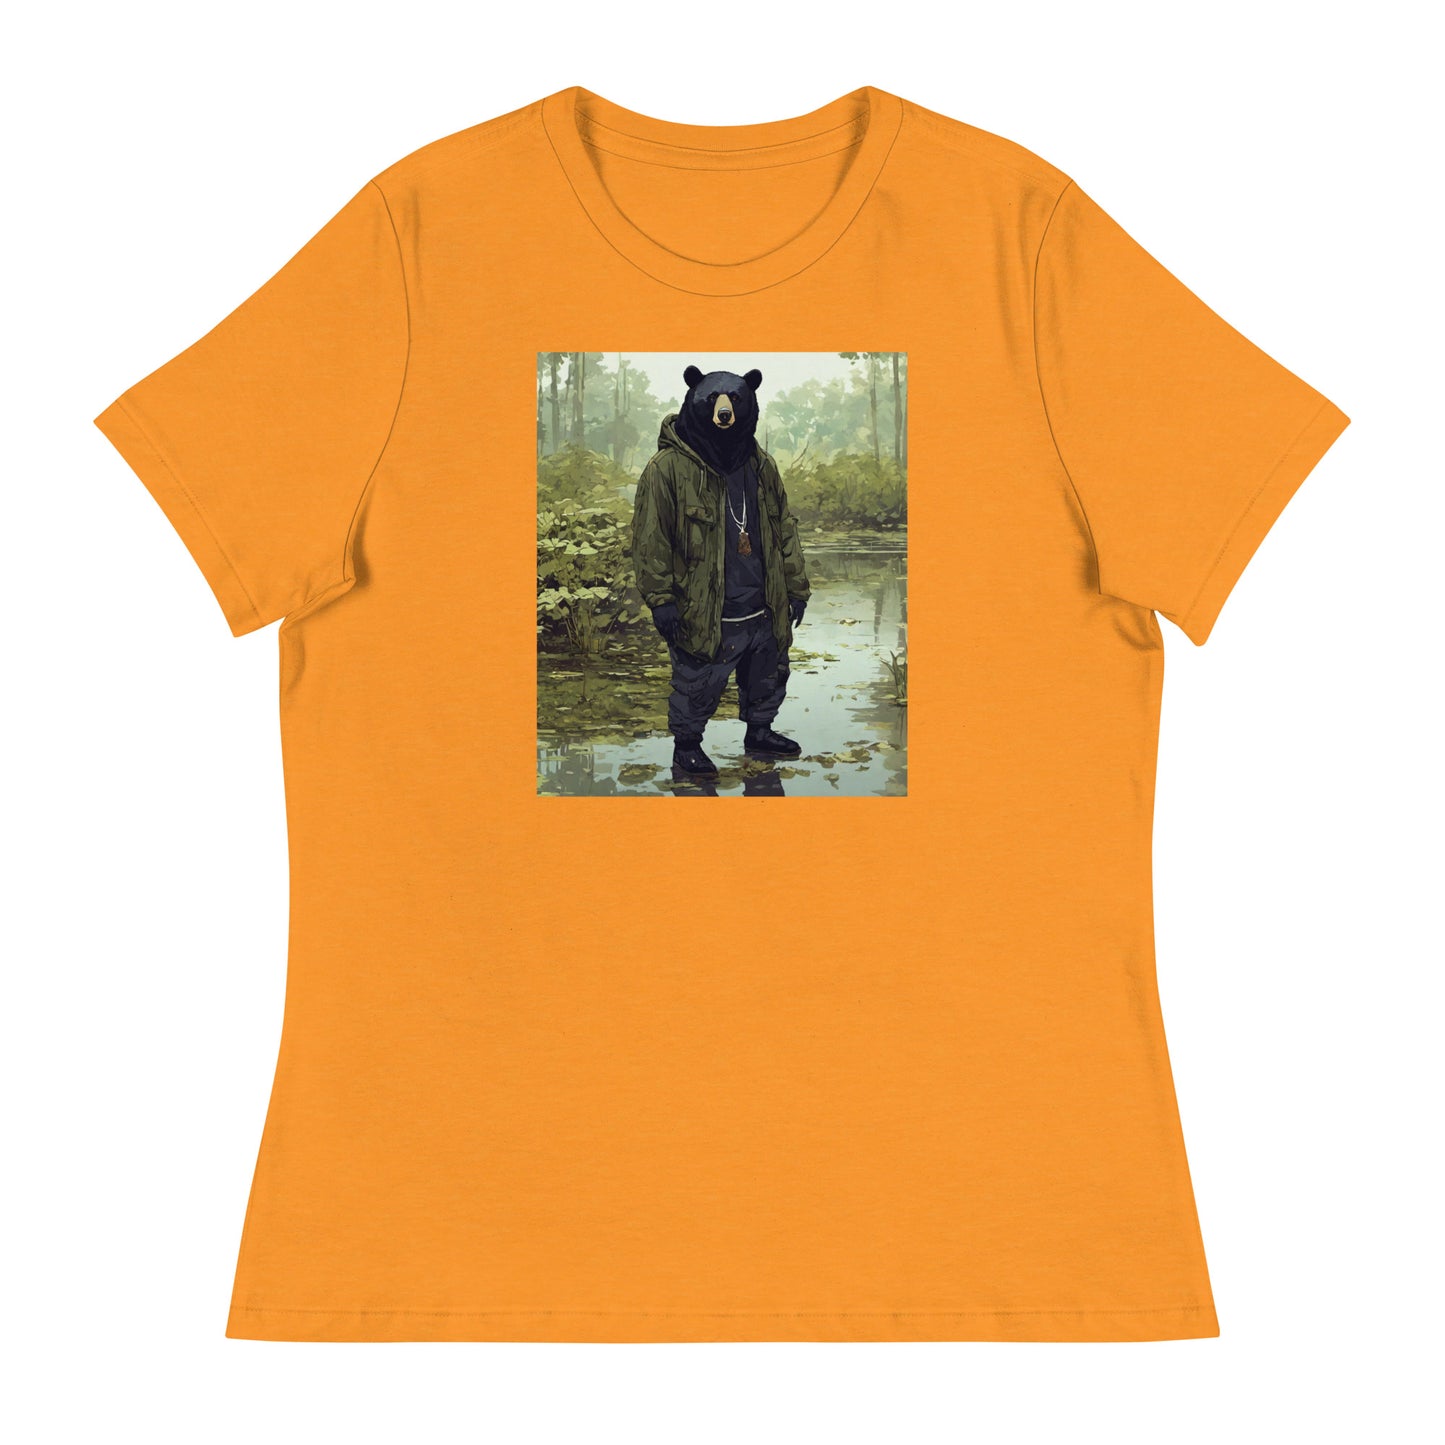 Stoic Black Bear Women's Graphic T-Shirt Heather Marmalade